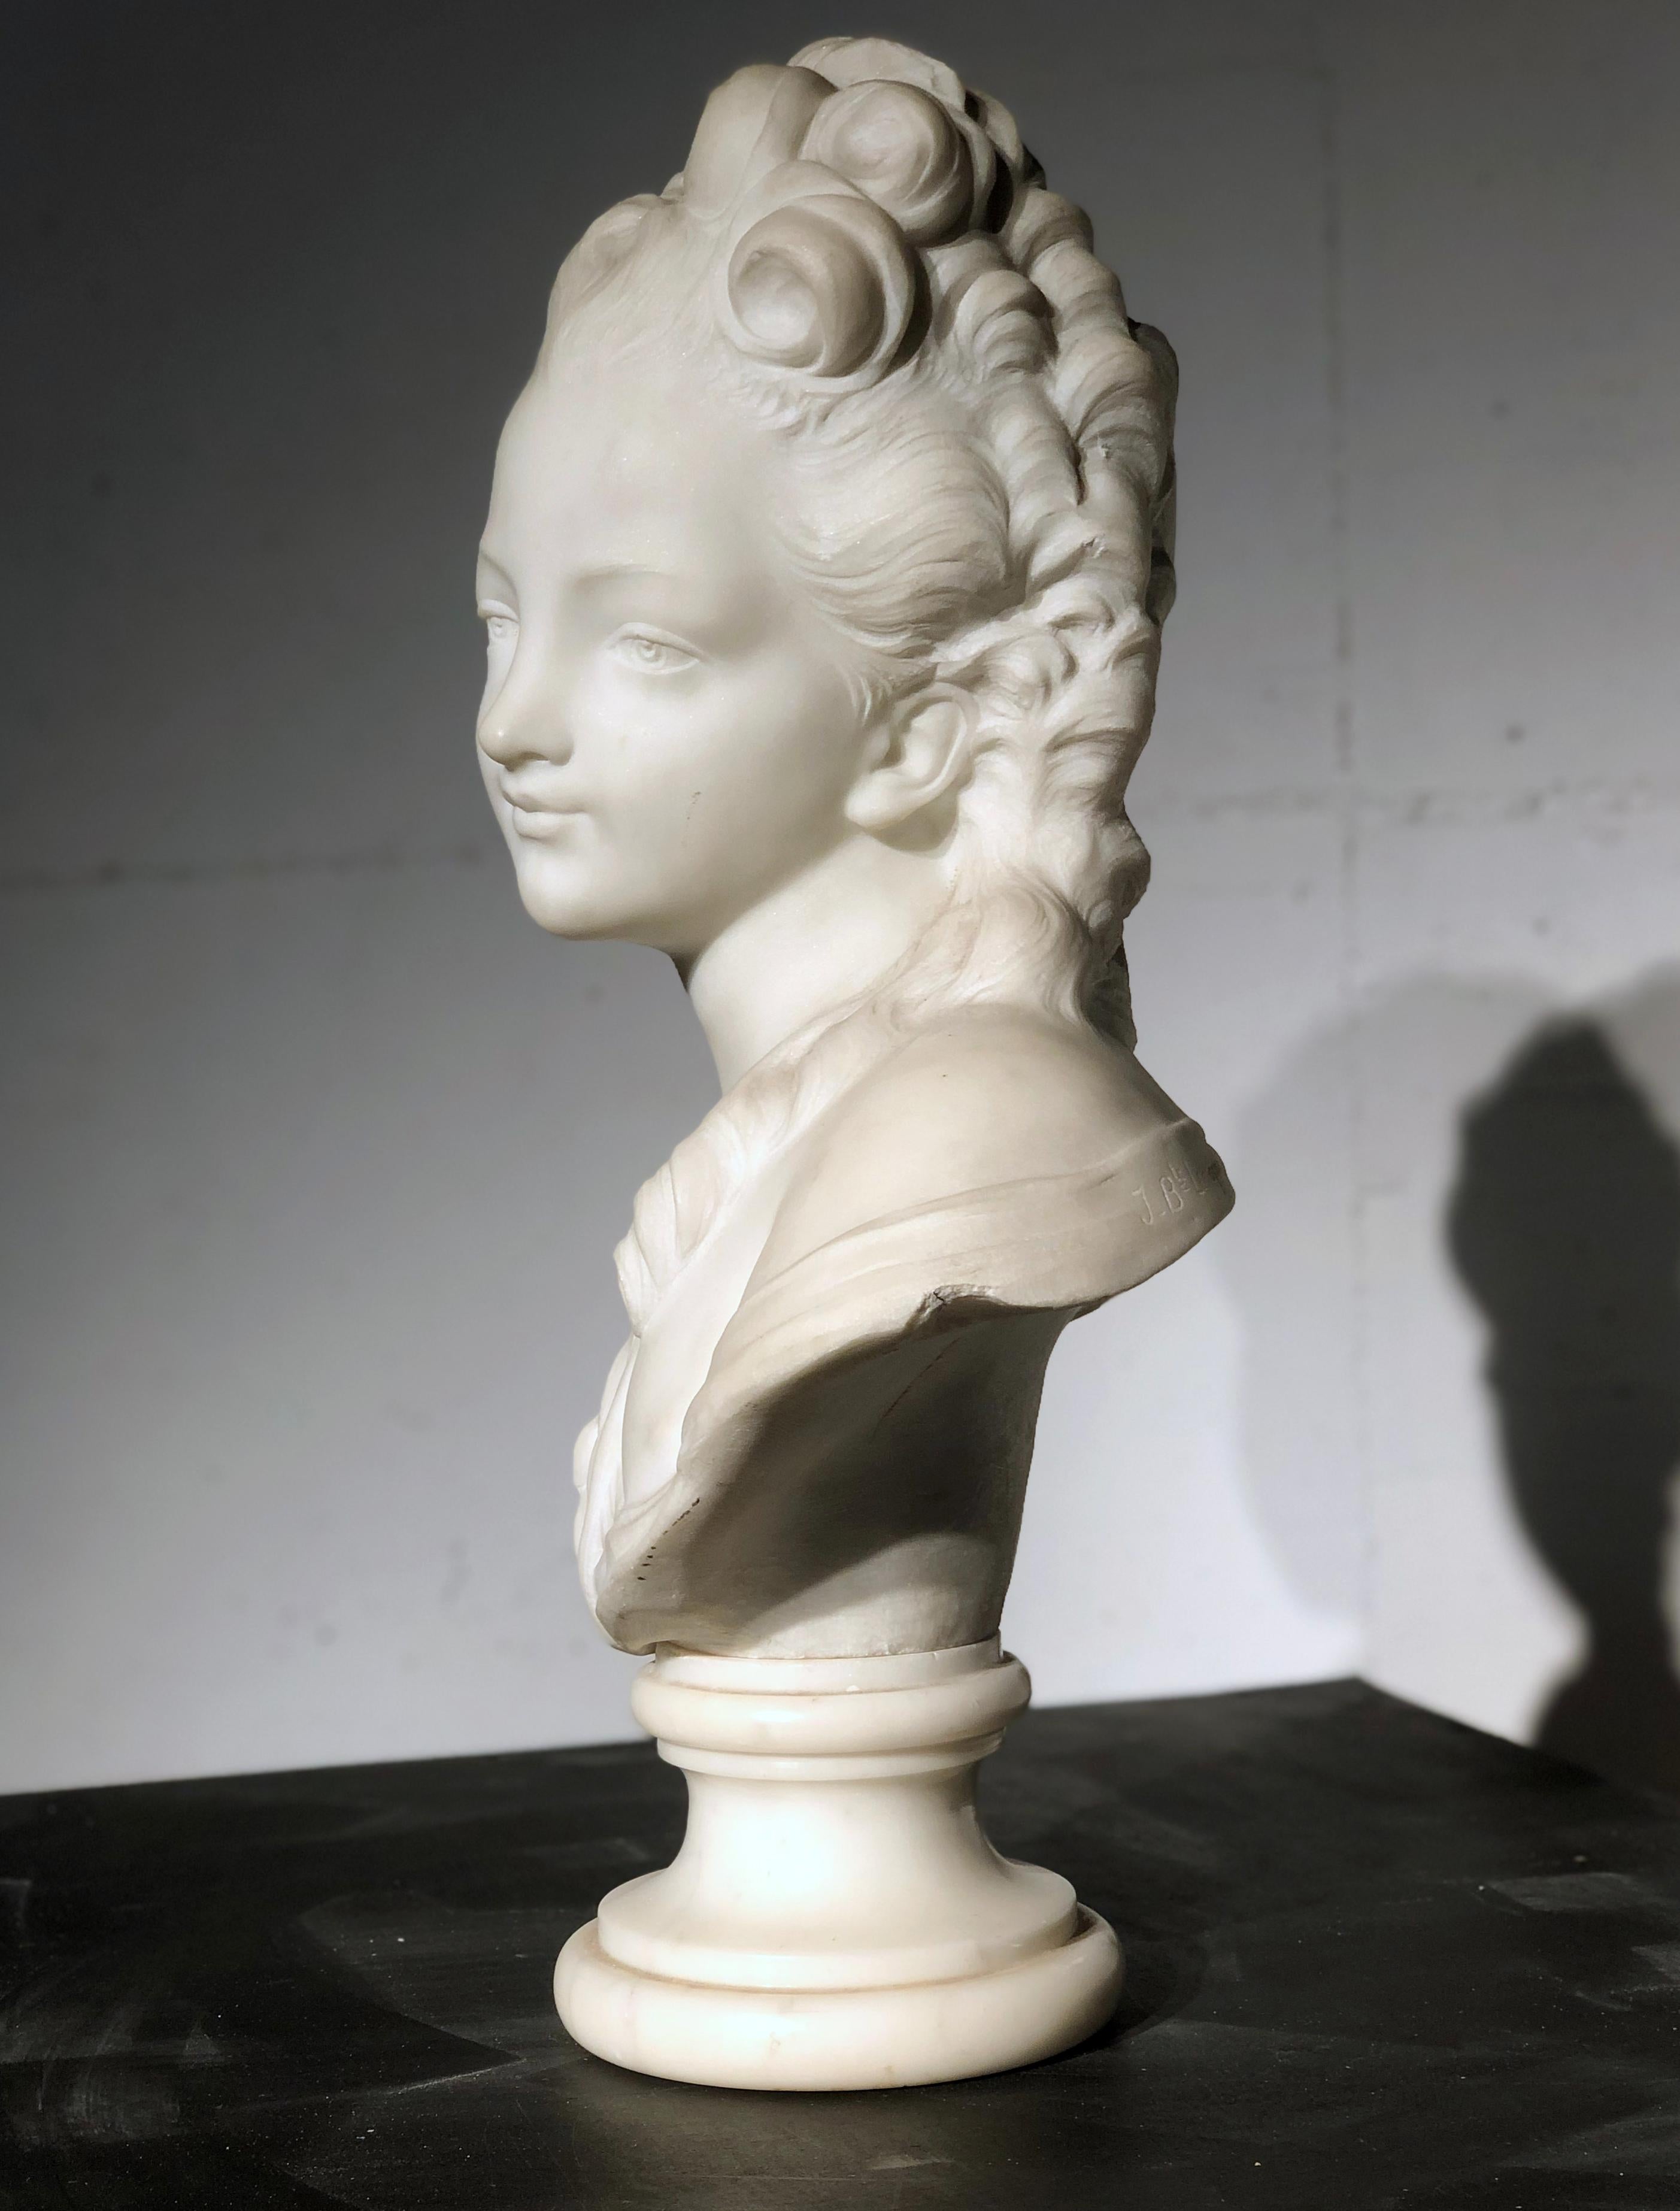 18th century sculptors